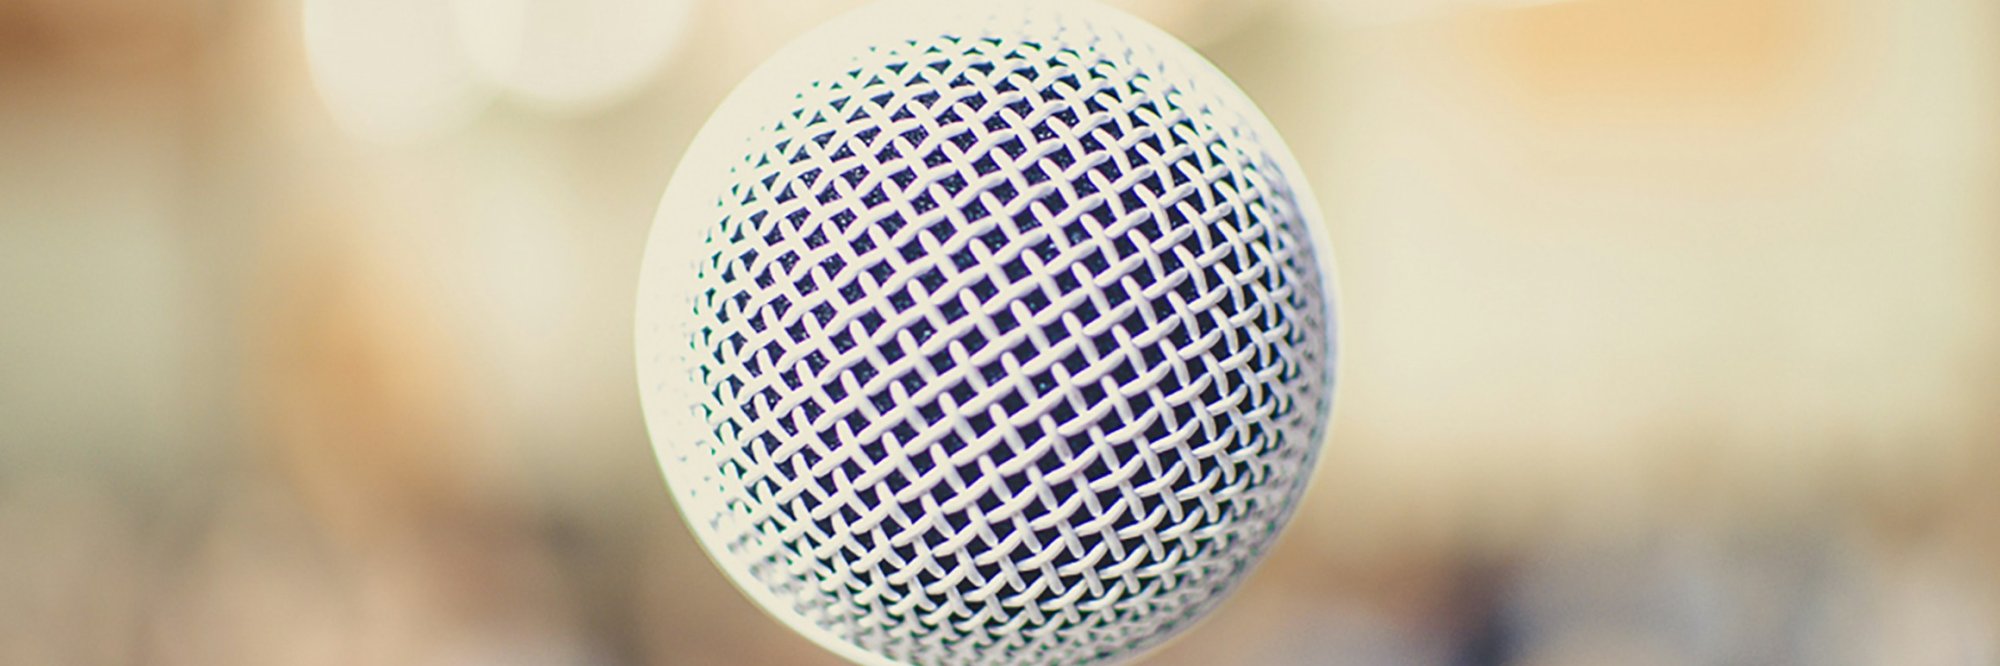 microphone close up